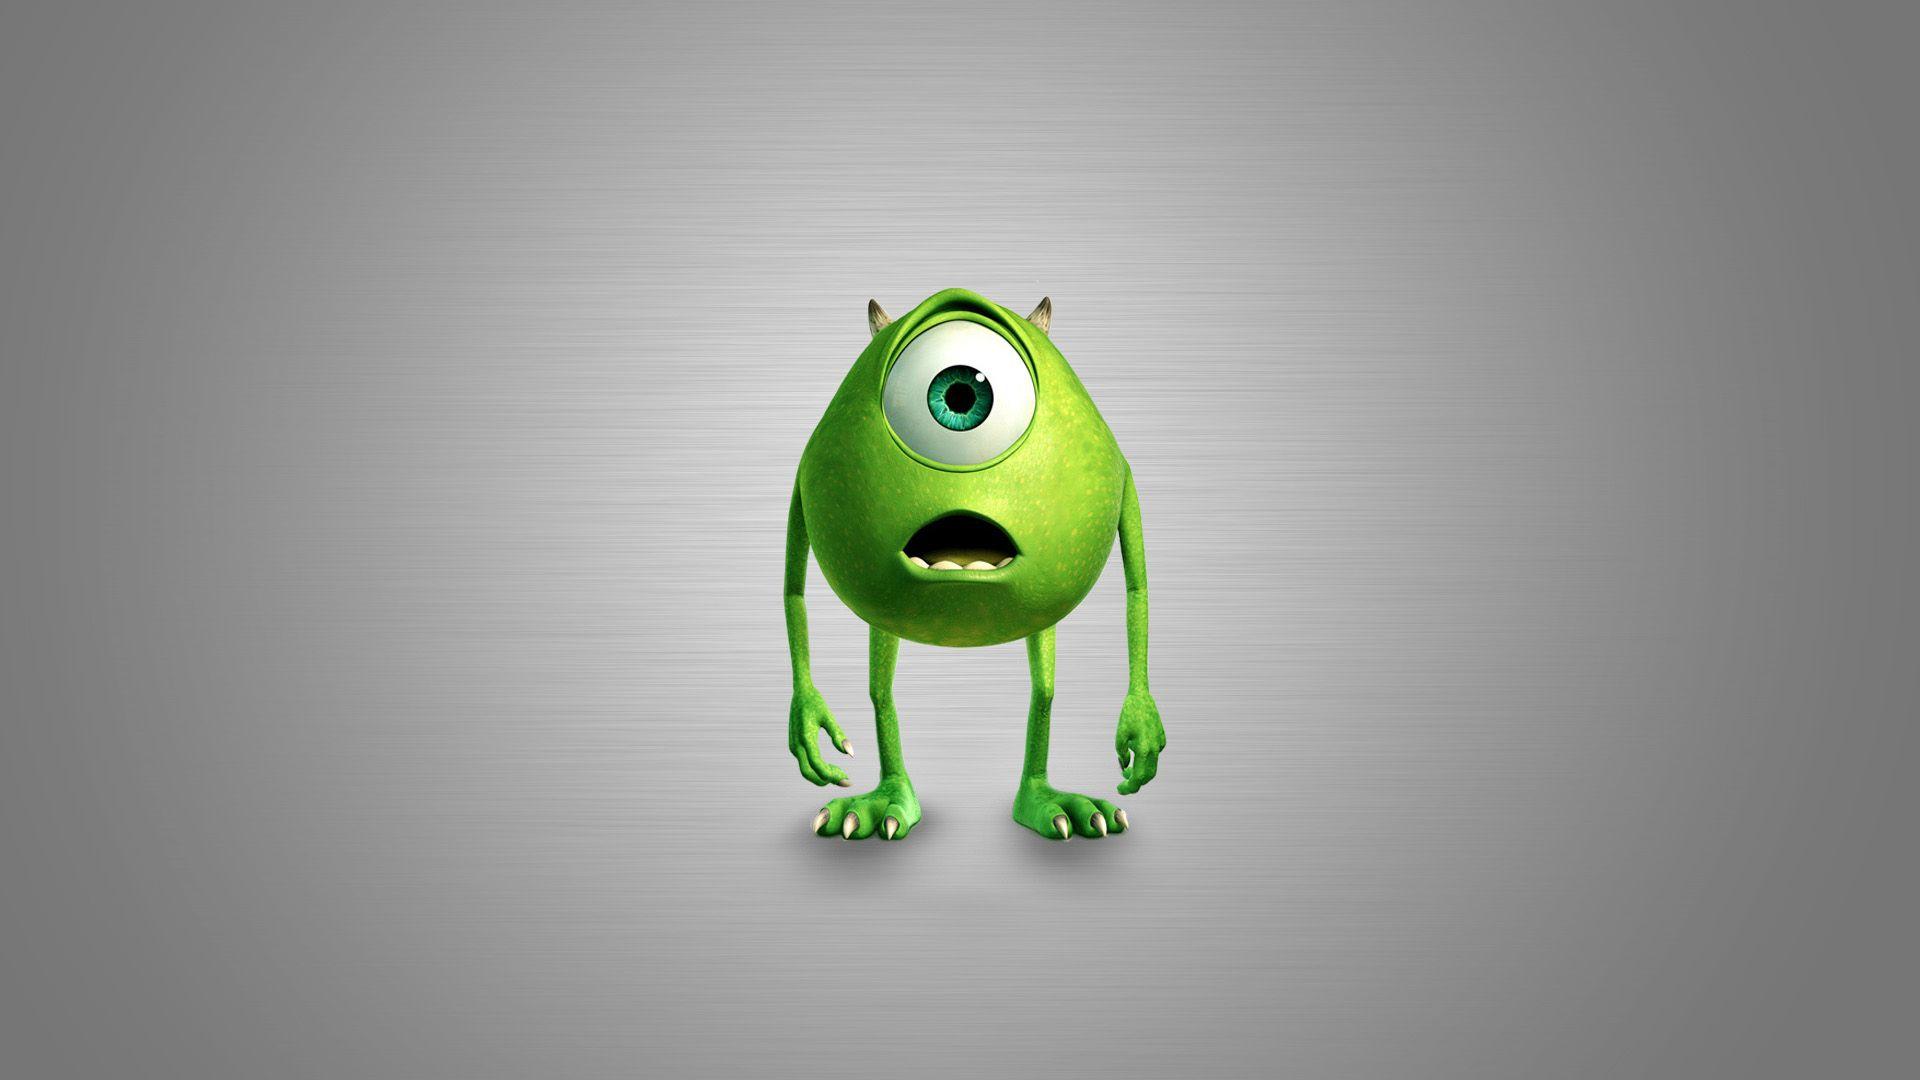 Download the Pixar Monster Wallpaper, Pixar Monster iPhone Wallpaper